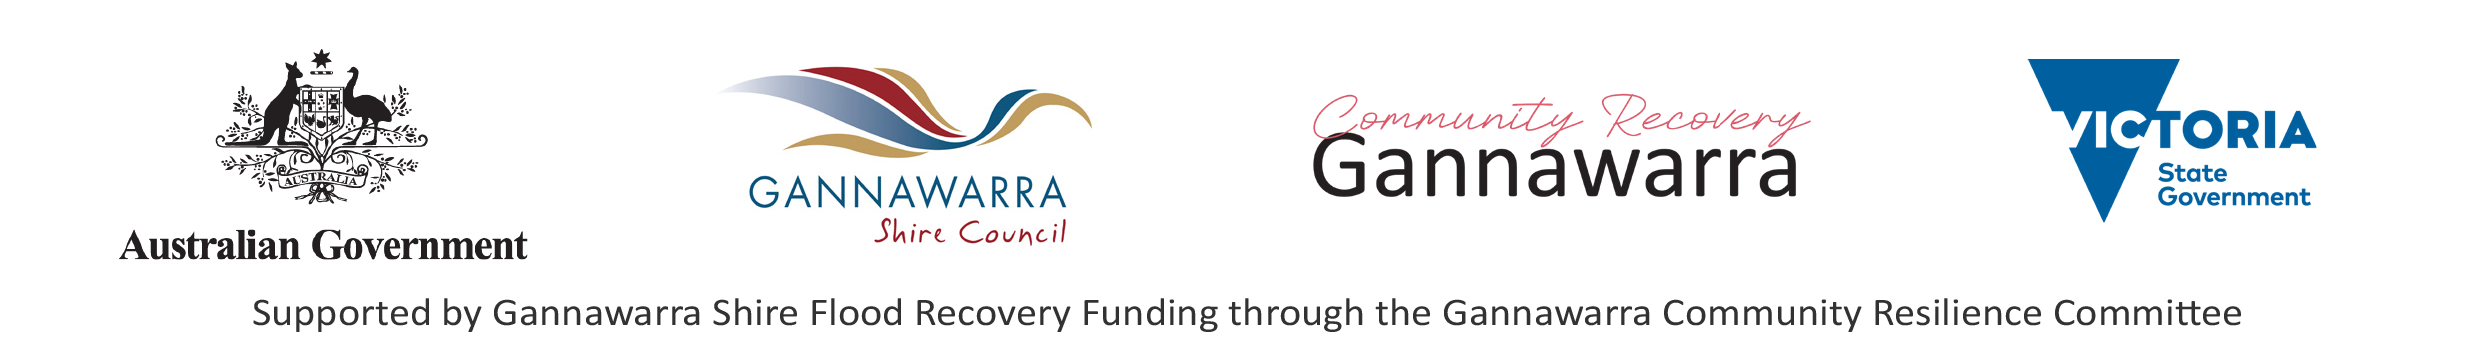 Funding Acknowledgement_Logo banner_final.png